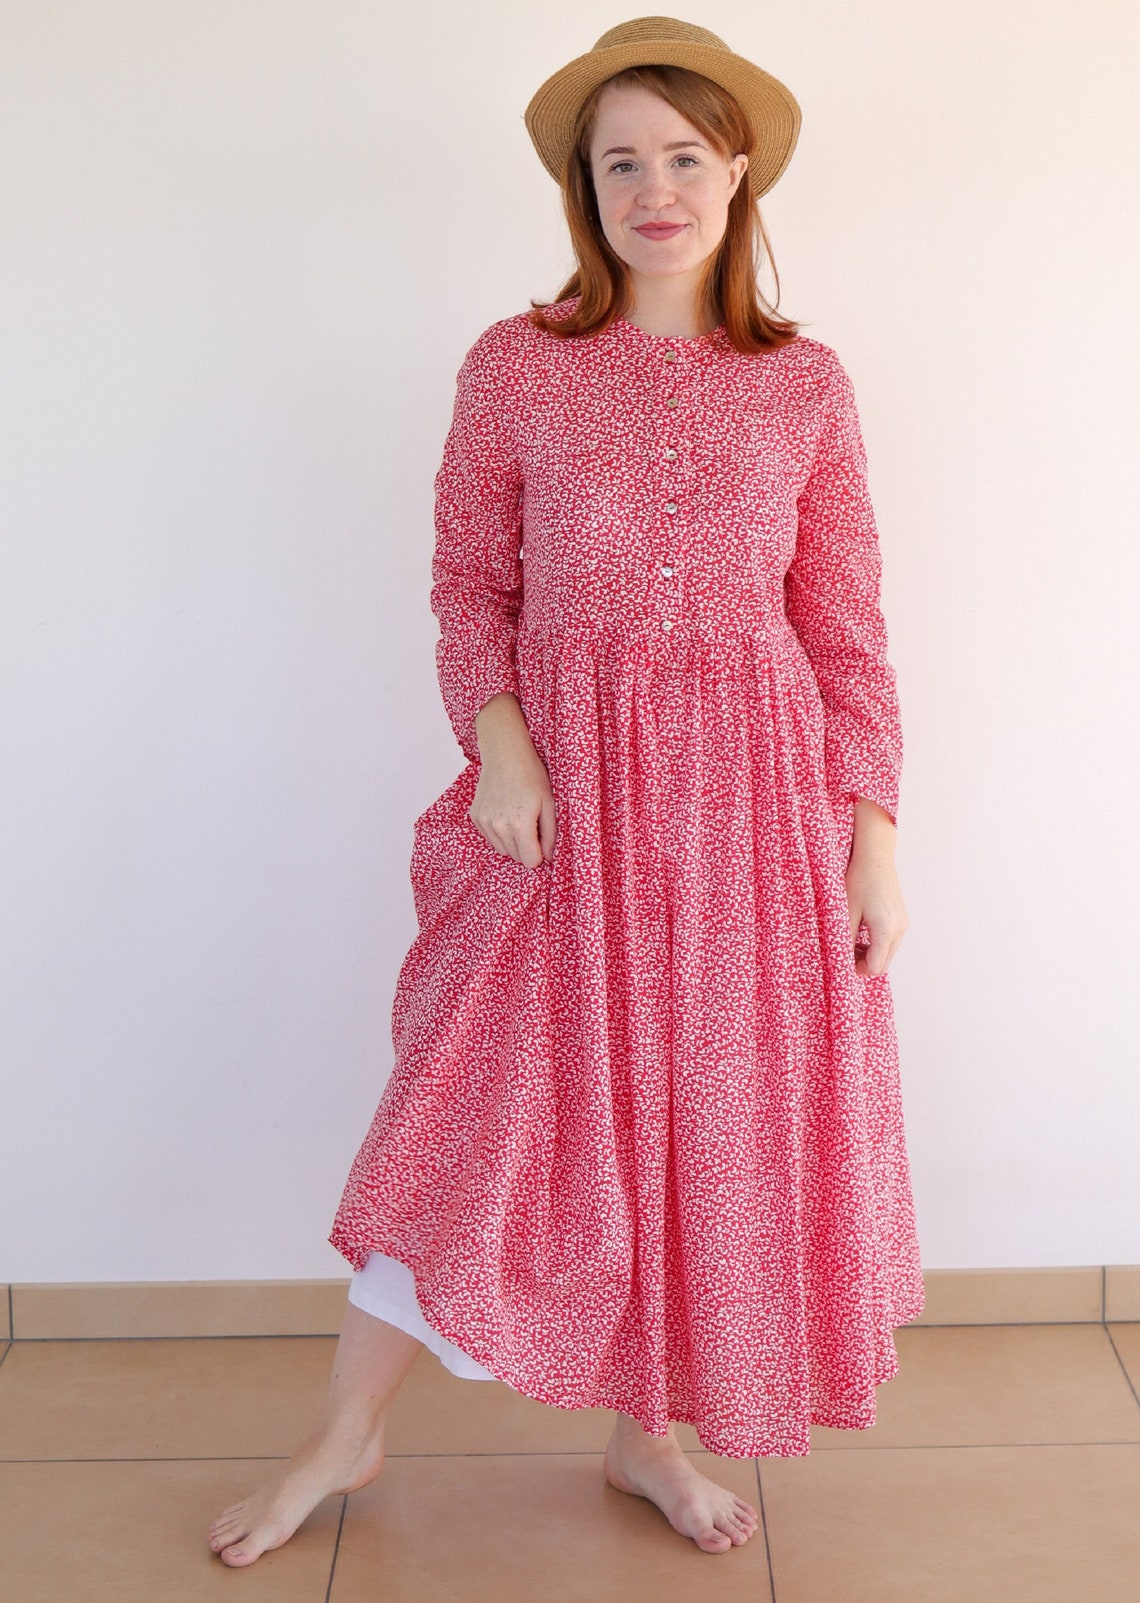 Cotton floral print long dress cotton dress for summer | Etsy